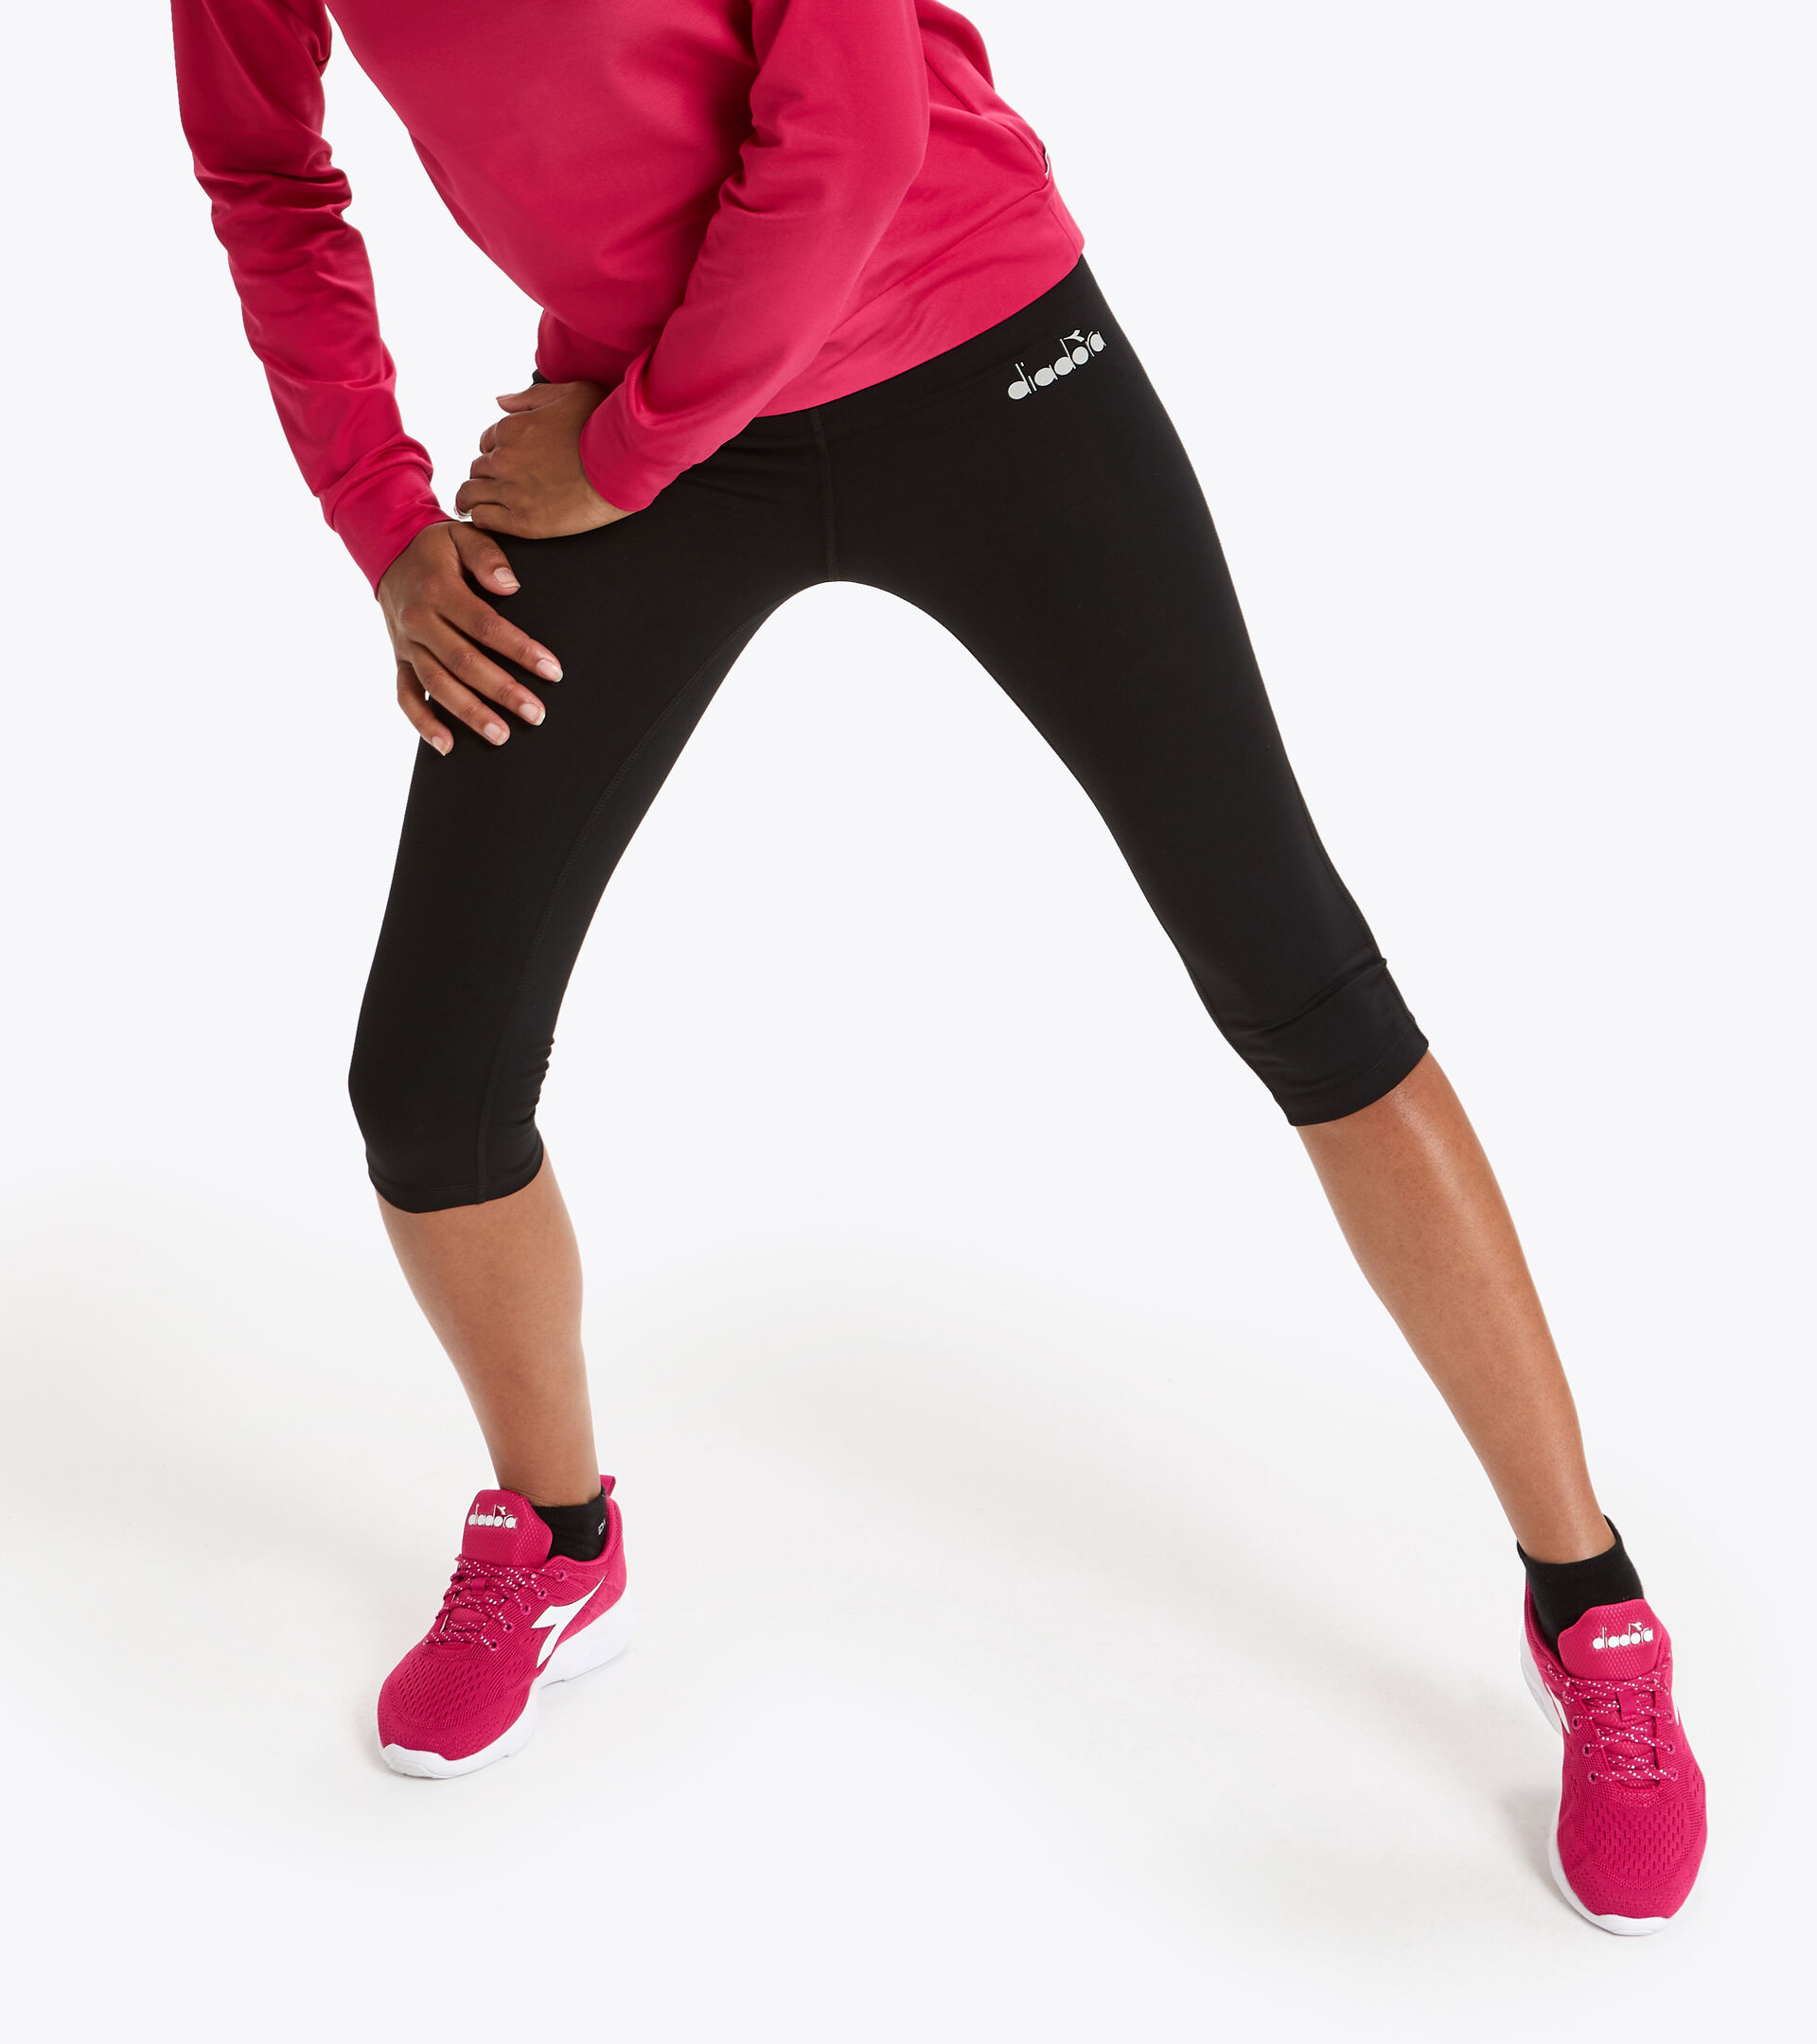 L. WINTER RUNNING TIGHTS BE ONE Running leggings - Women - Diadora Online  Store DK